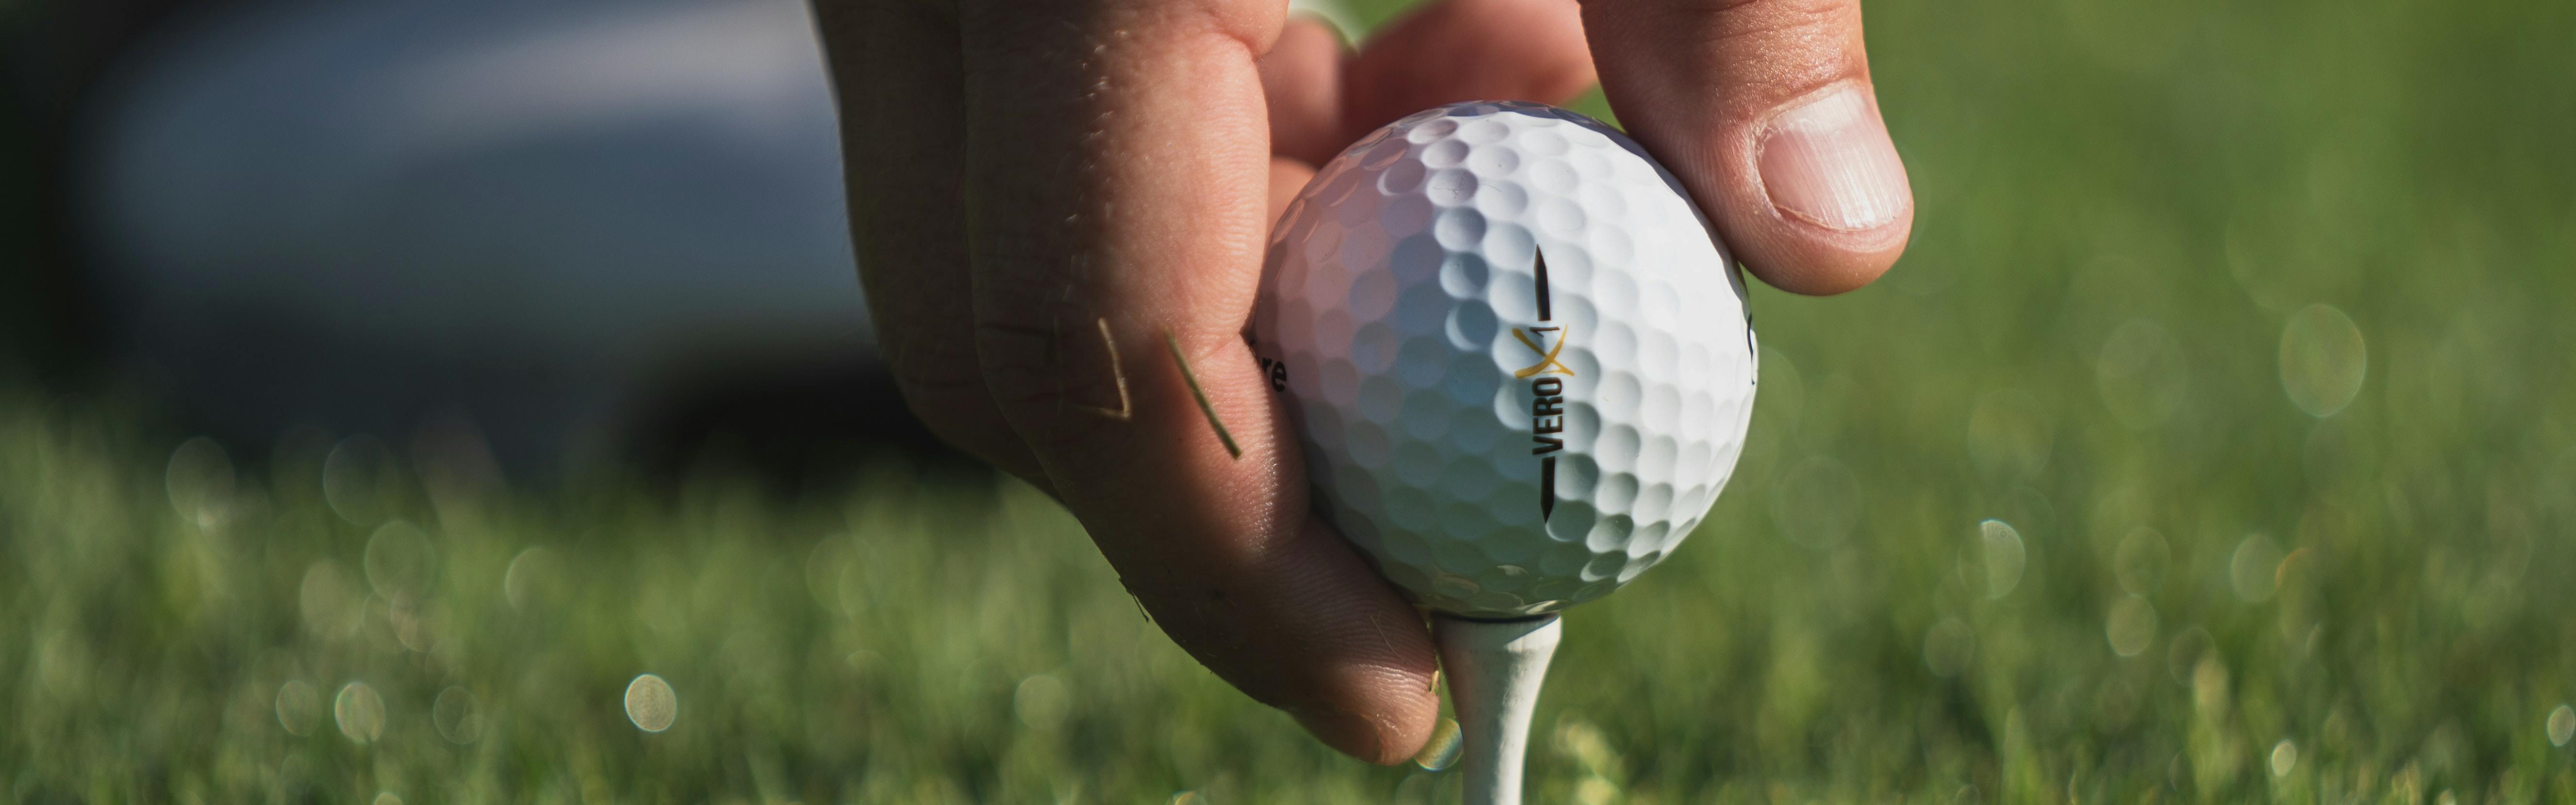 A man's hand places a golf ball onto a tee.